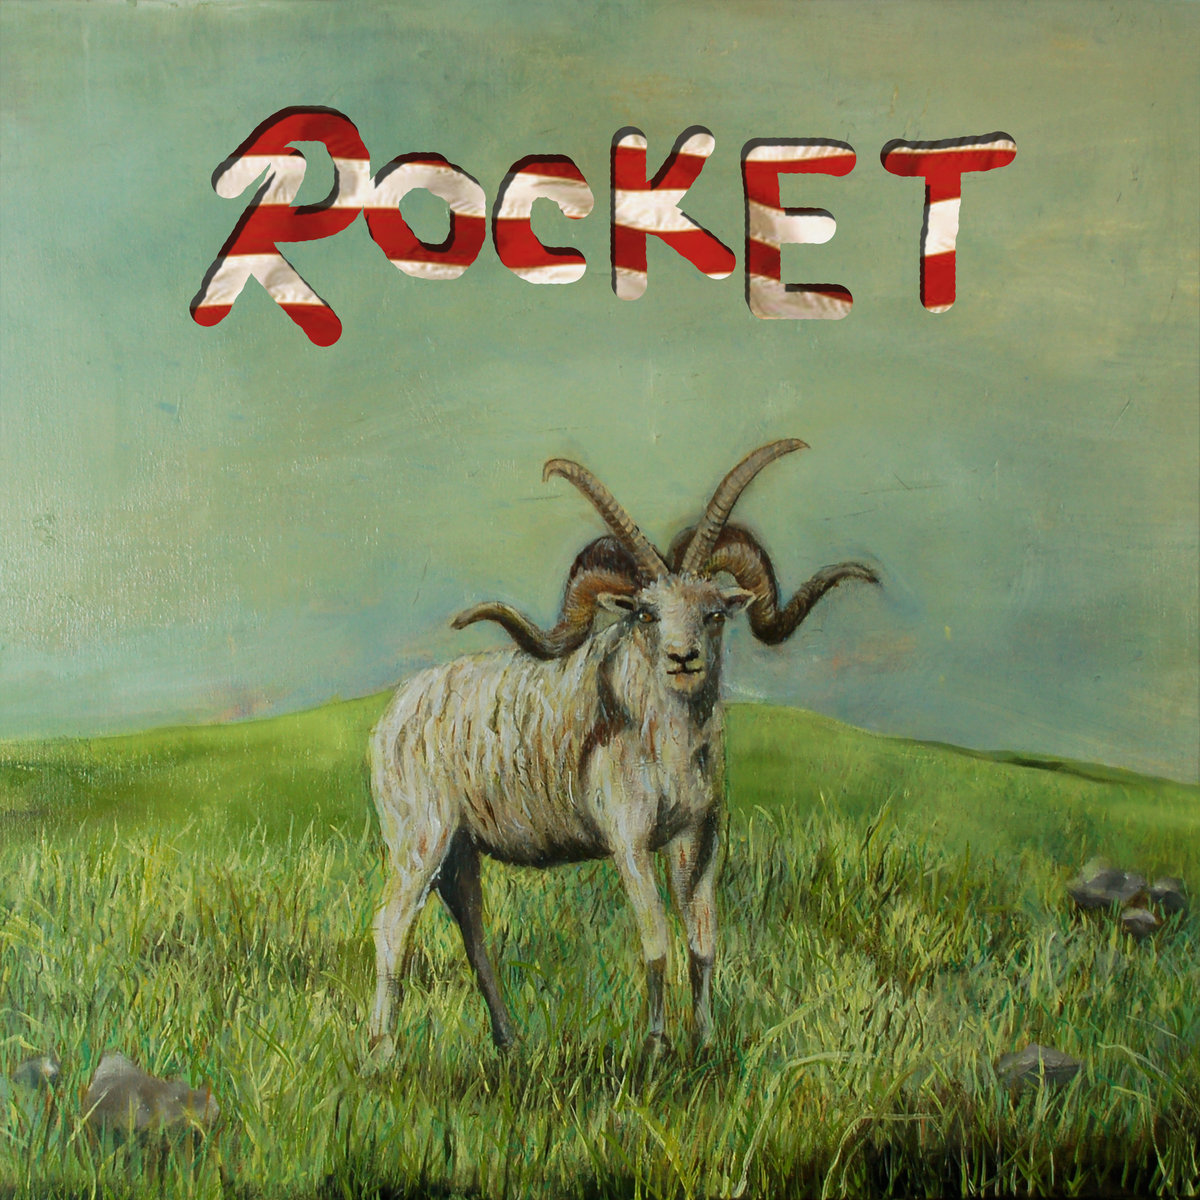 'Rocket' by (Sandy) Alex G album review